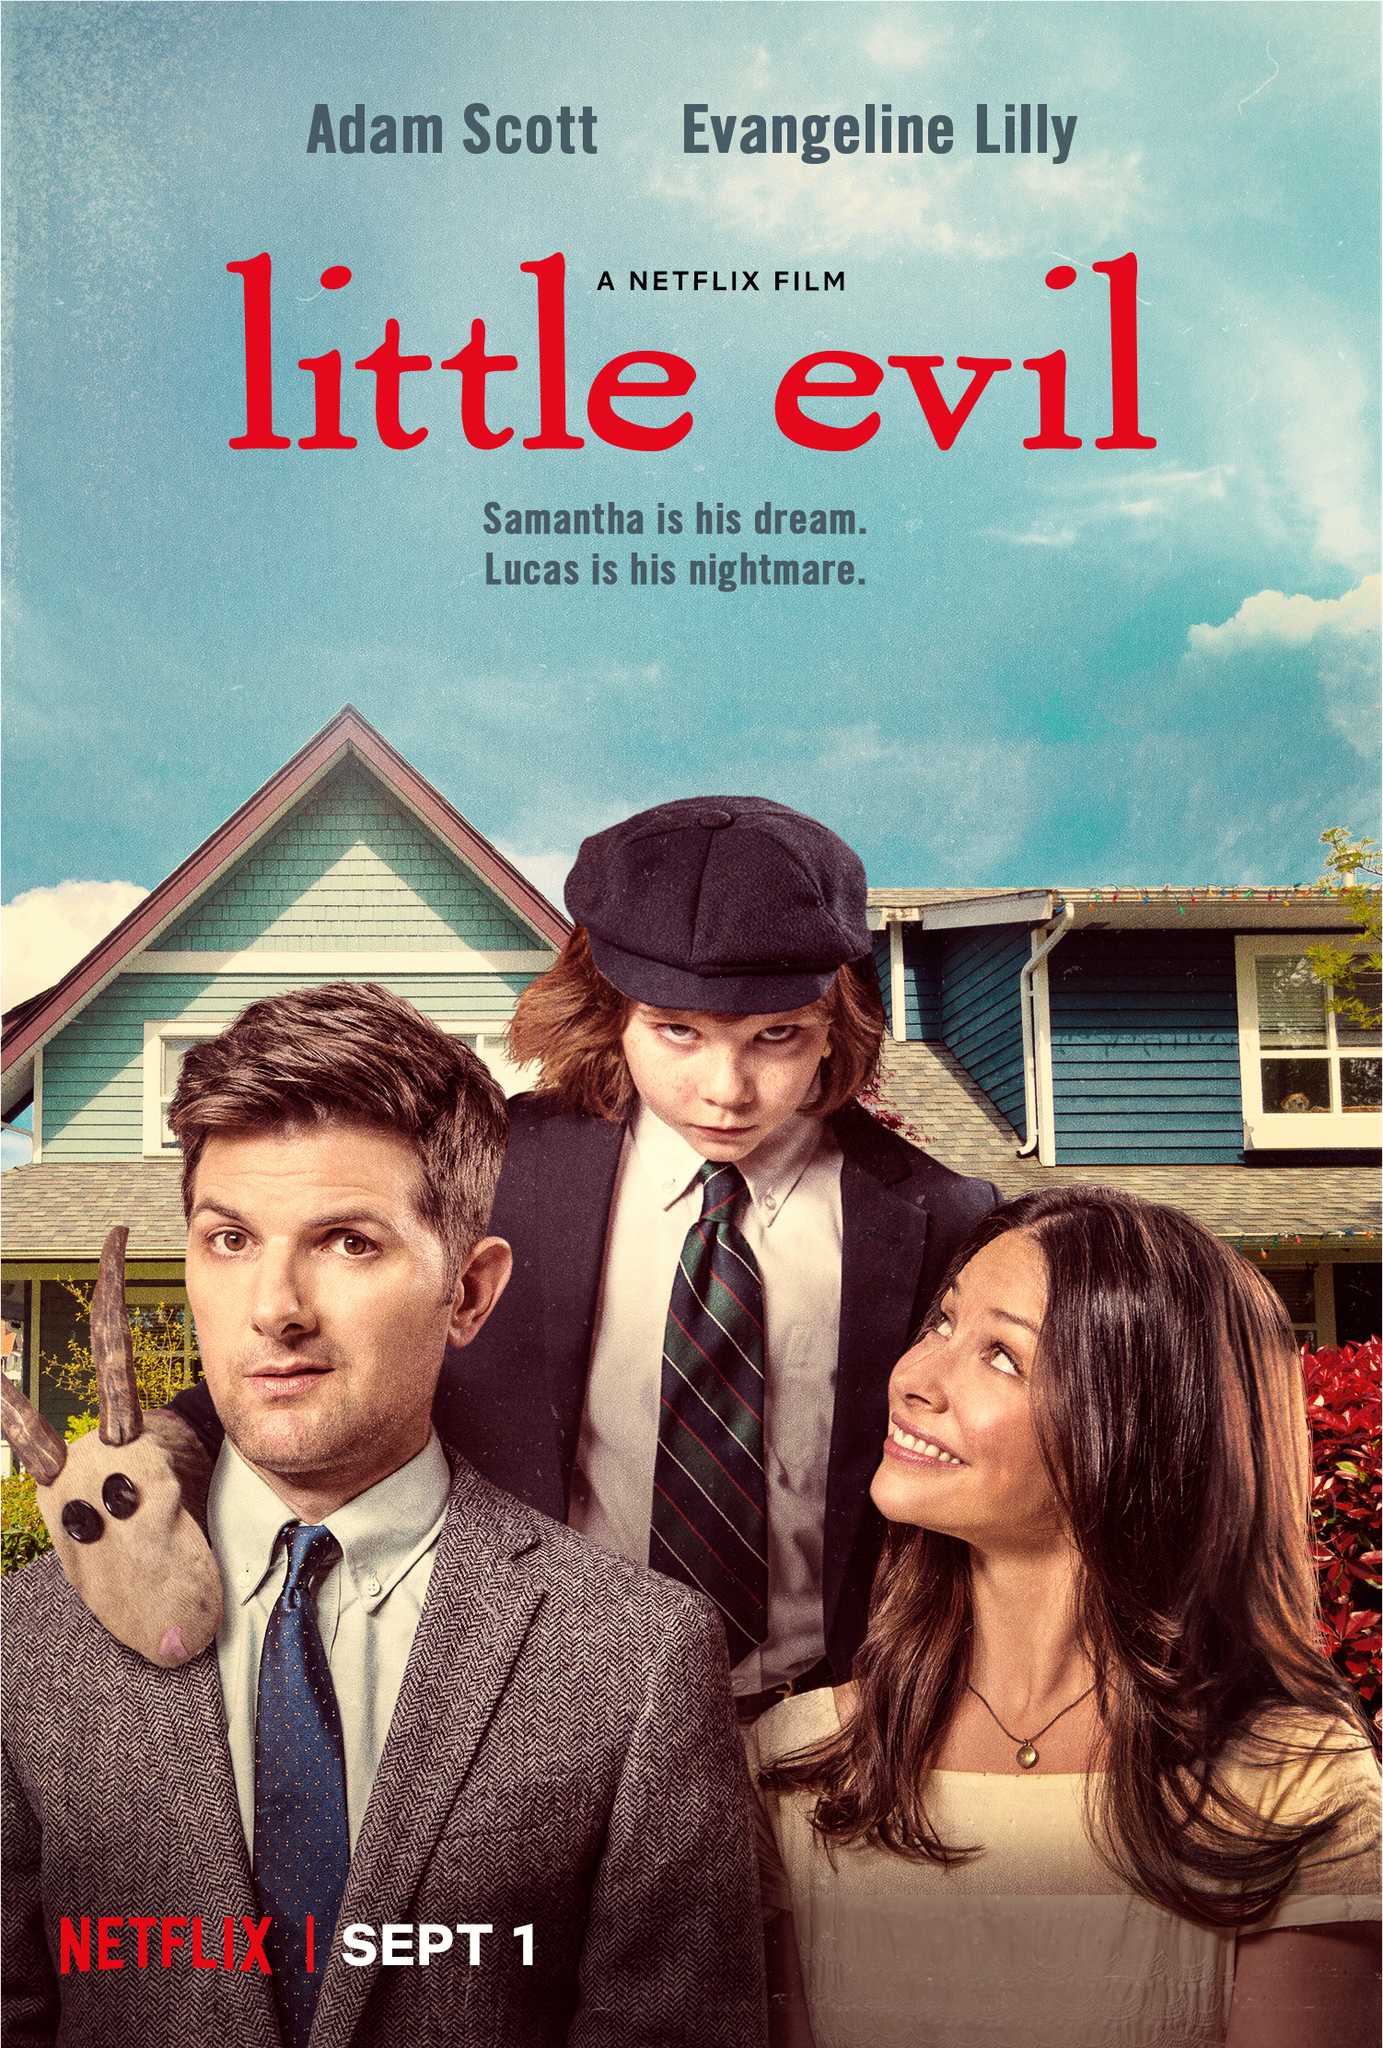 Little Evil (2017) Evangeline Lilly